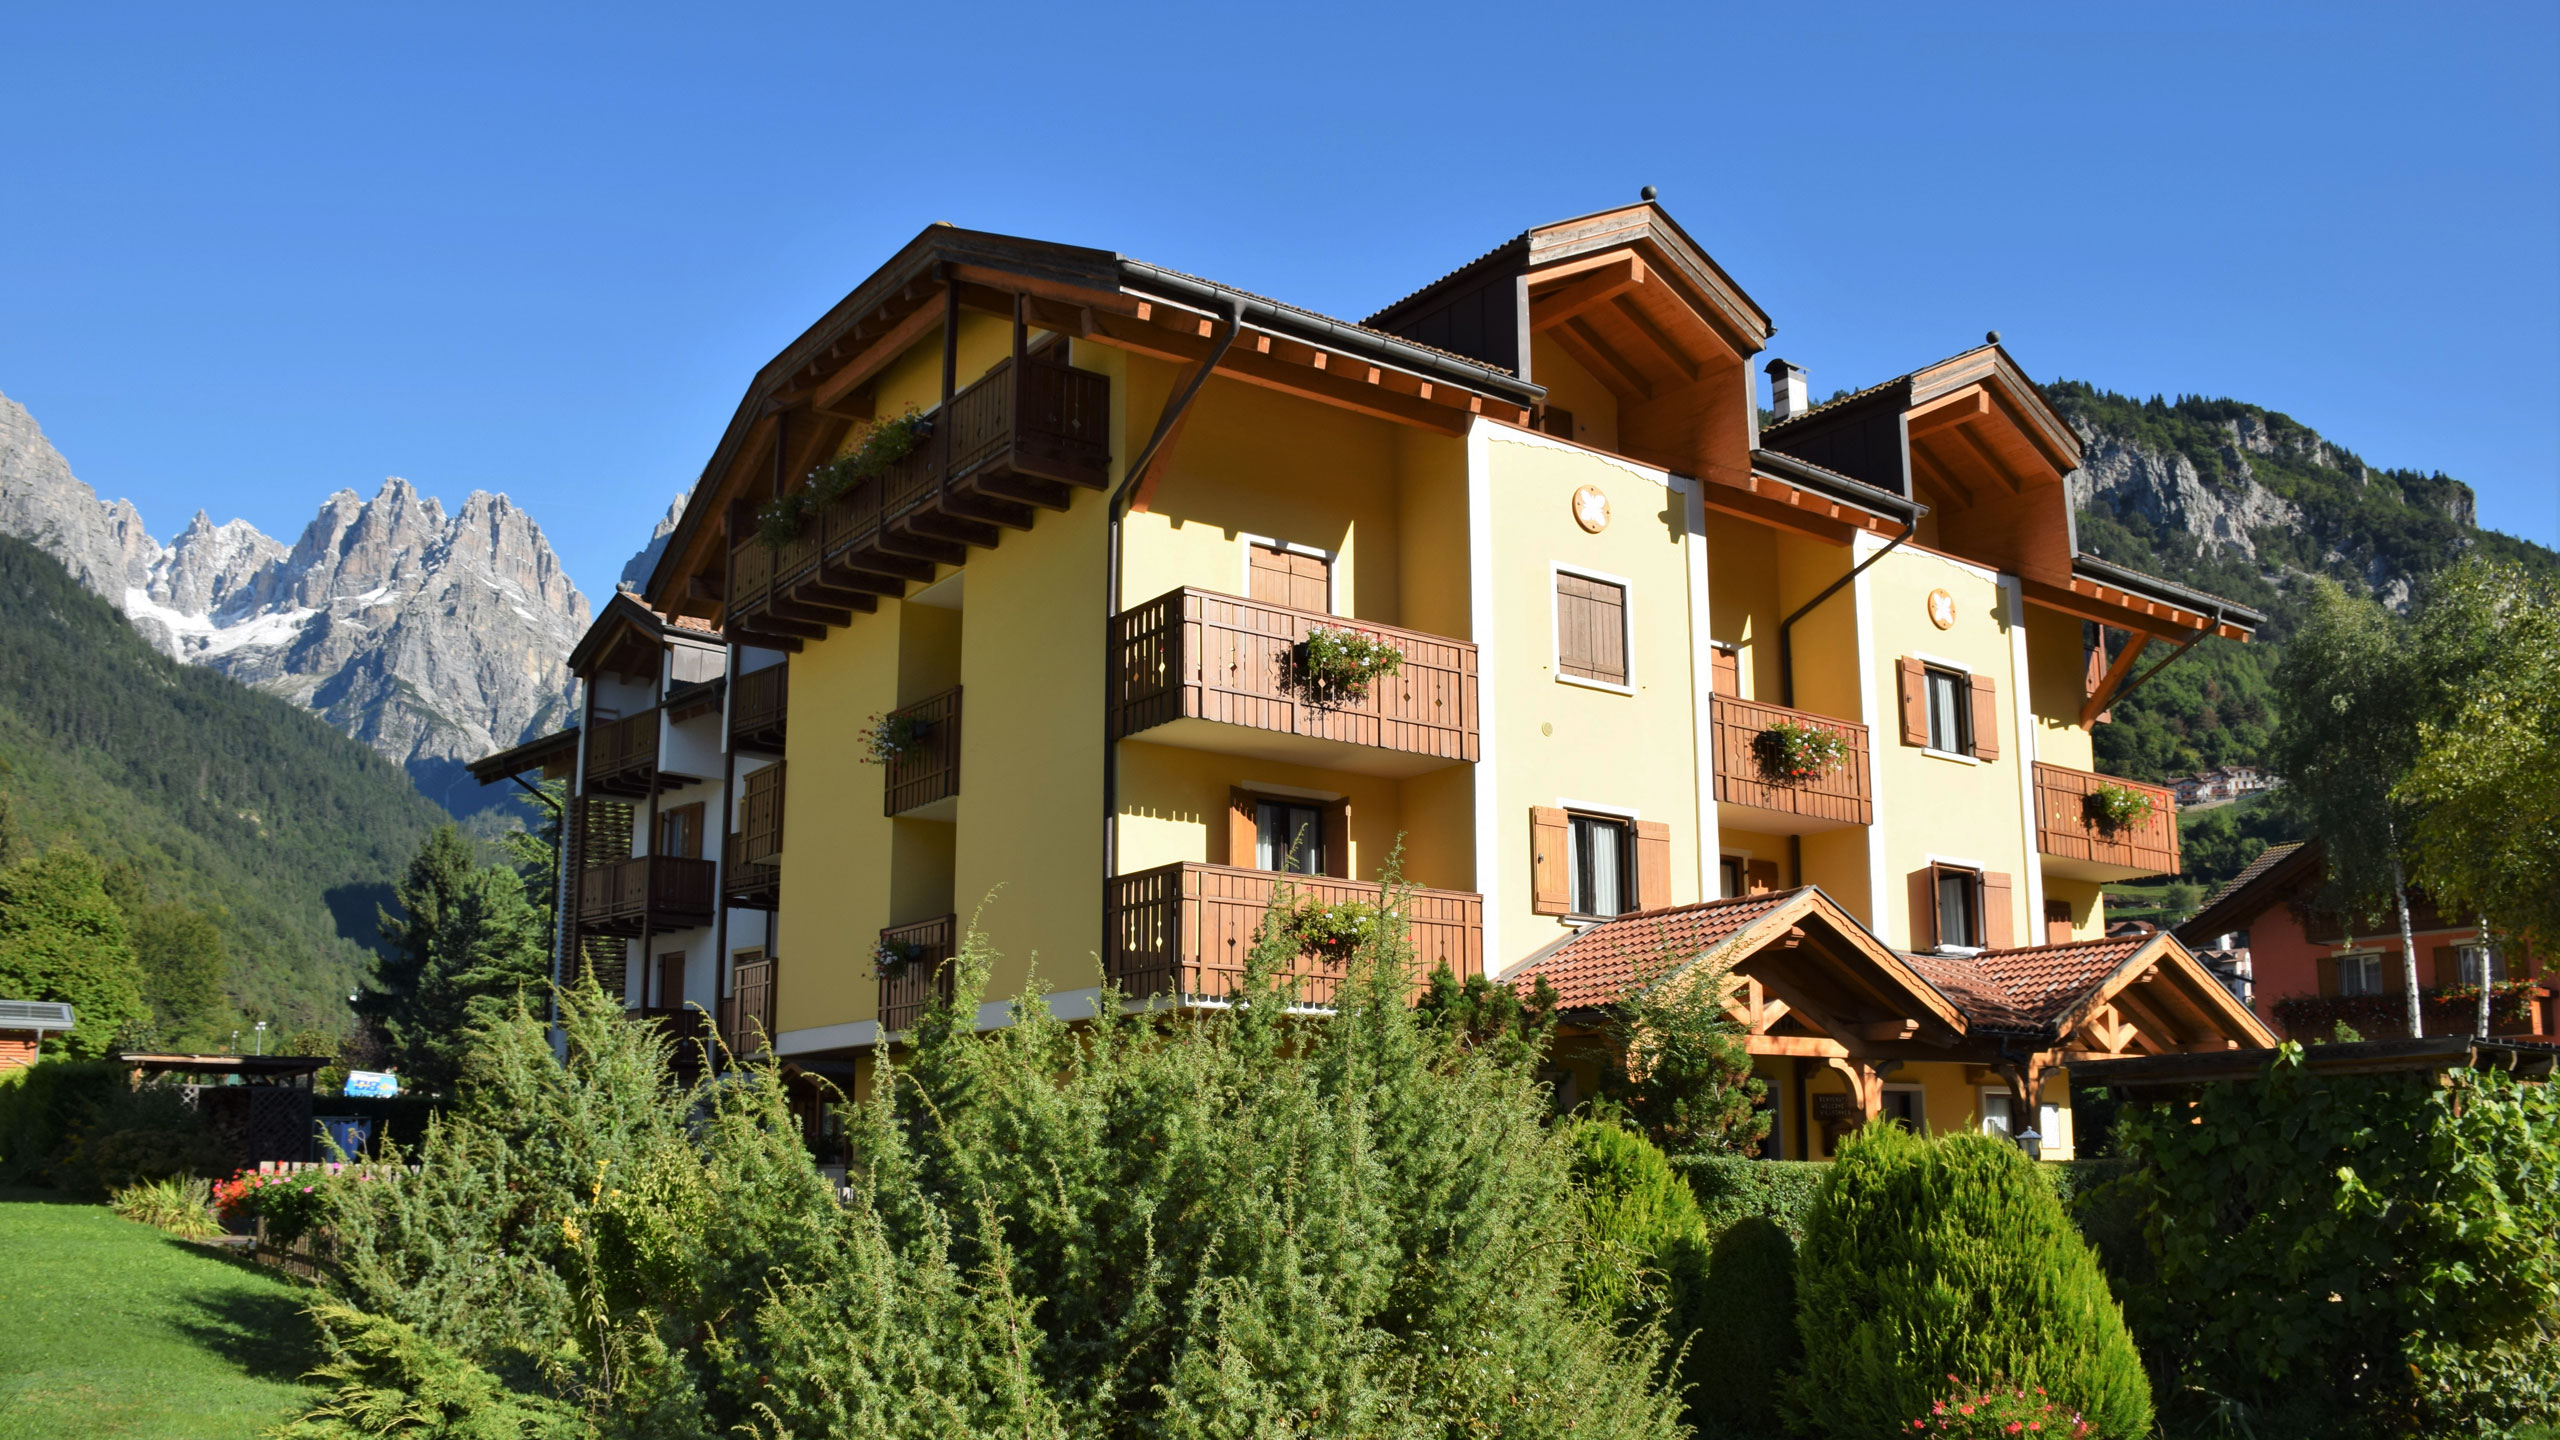 Residence Molveno 3 Stars AlpenRose - Between Lake Molveno and the Brenta Dolomites in Trentino - Contacts